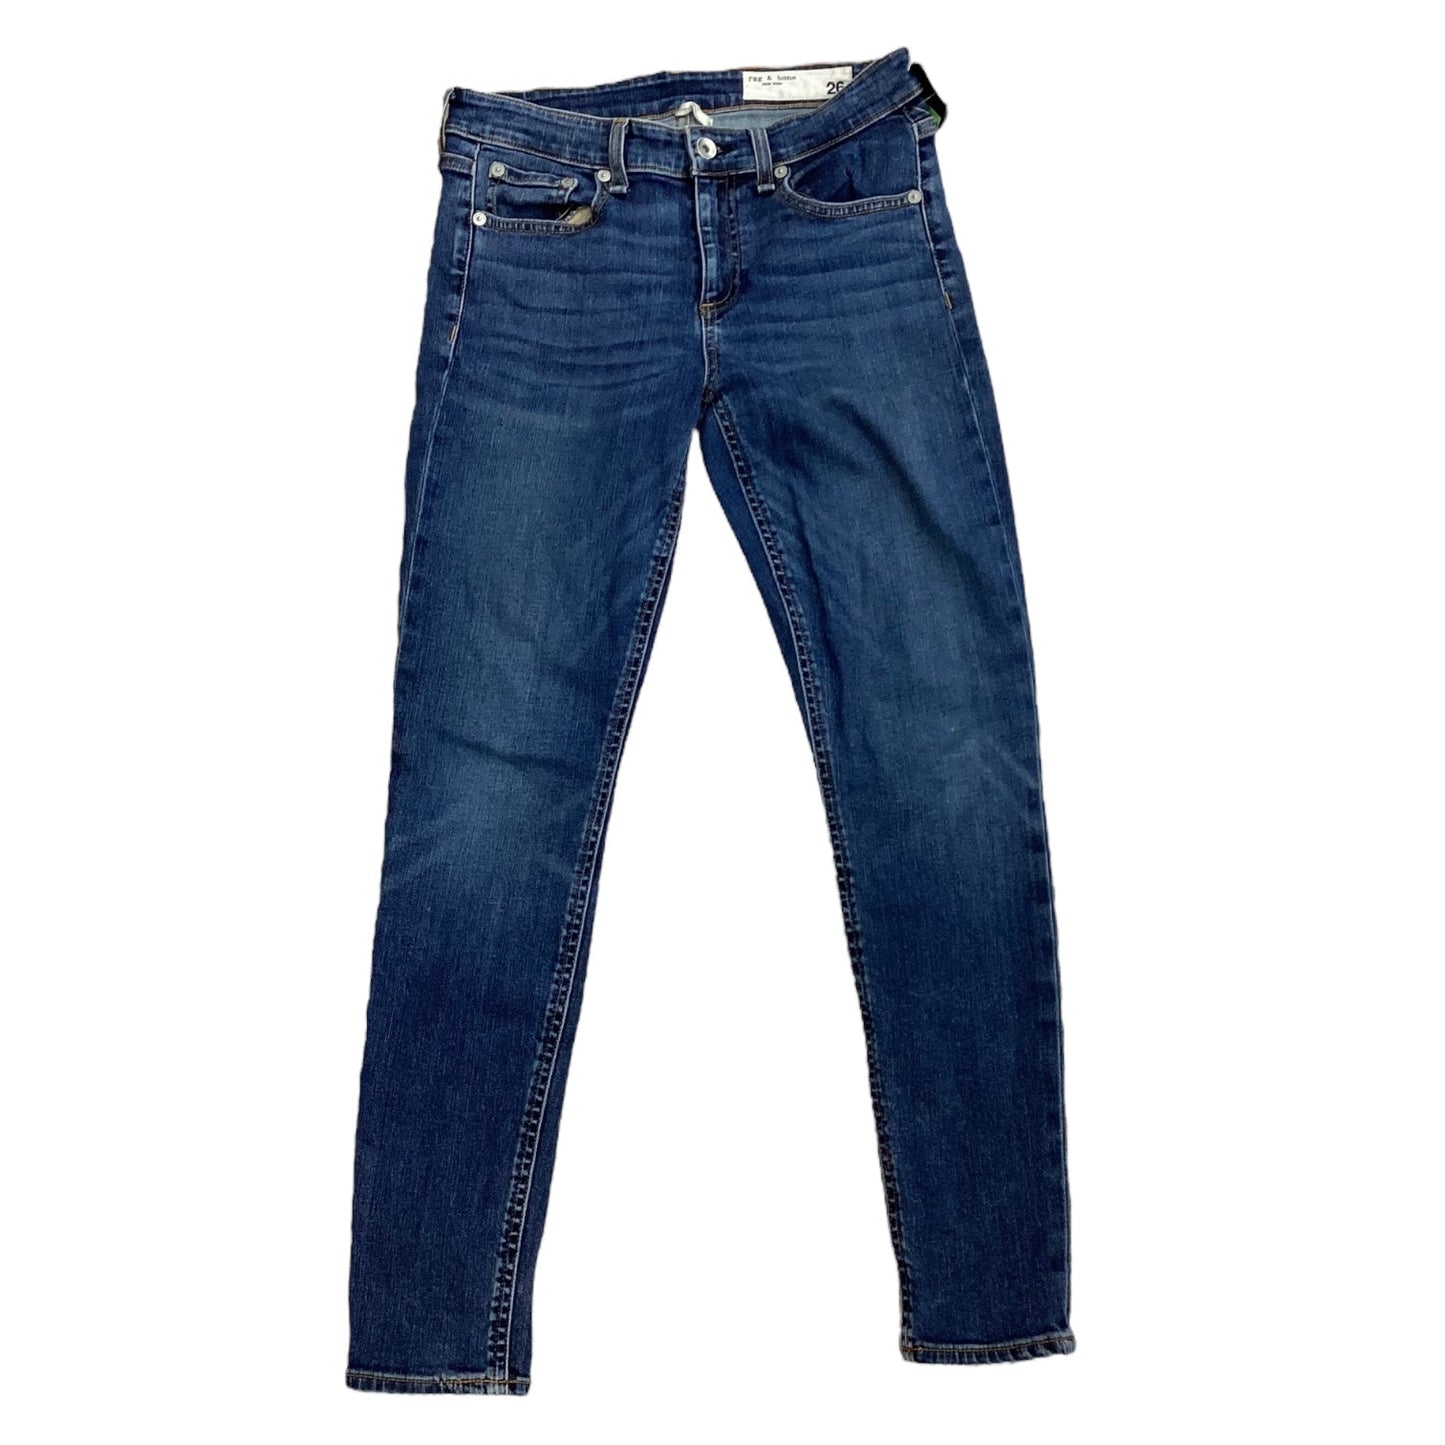 Blue Denim Jeans Skinny Rag & Bones Jeans, Size 4